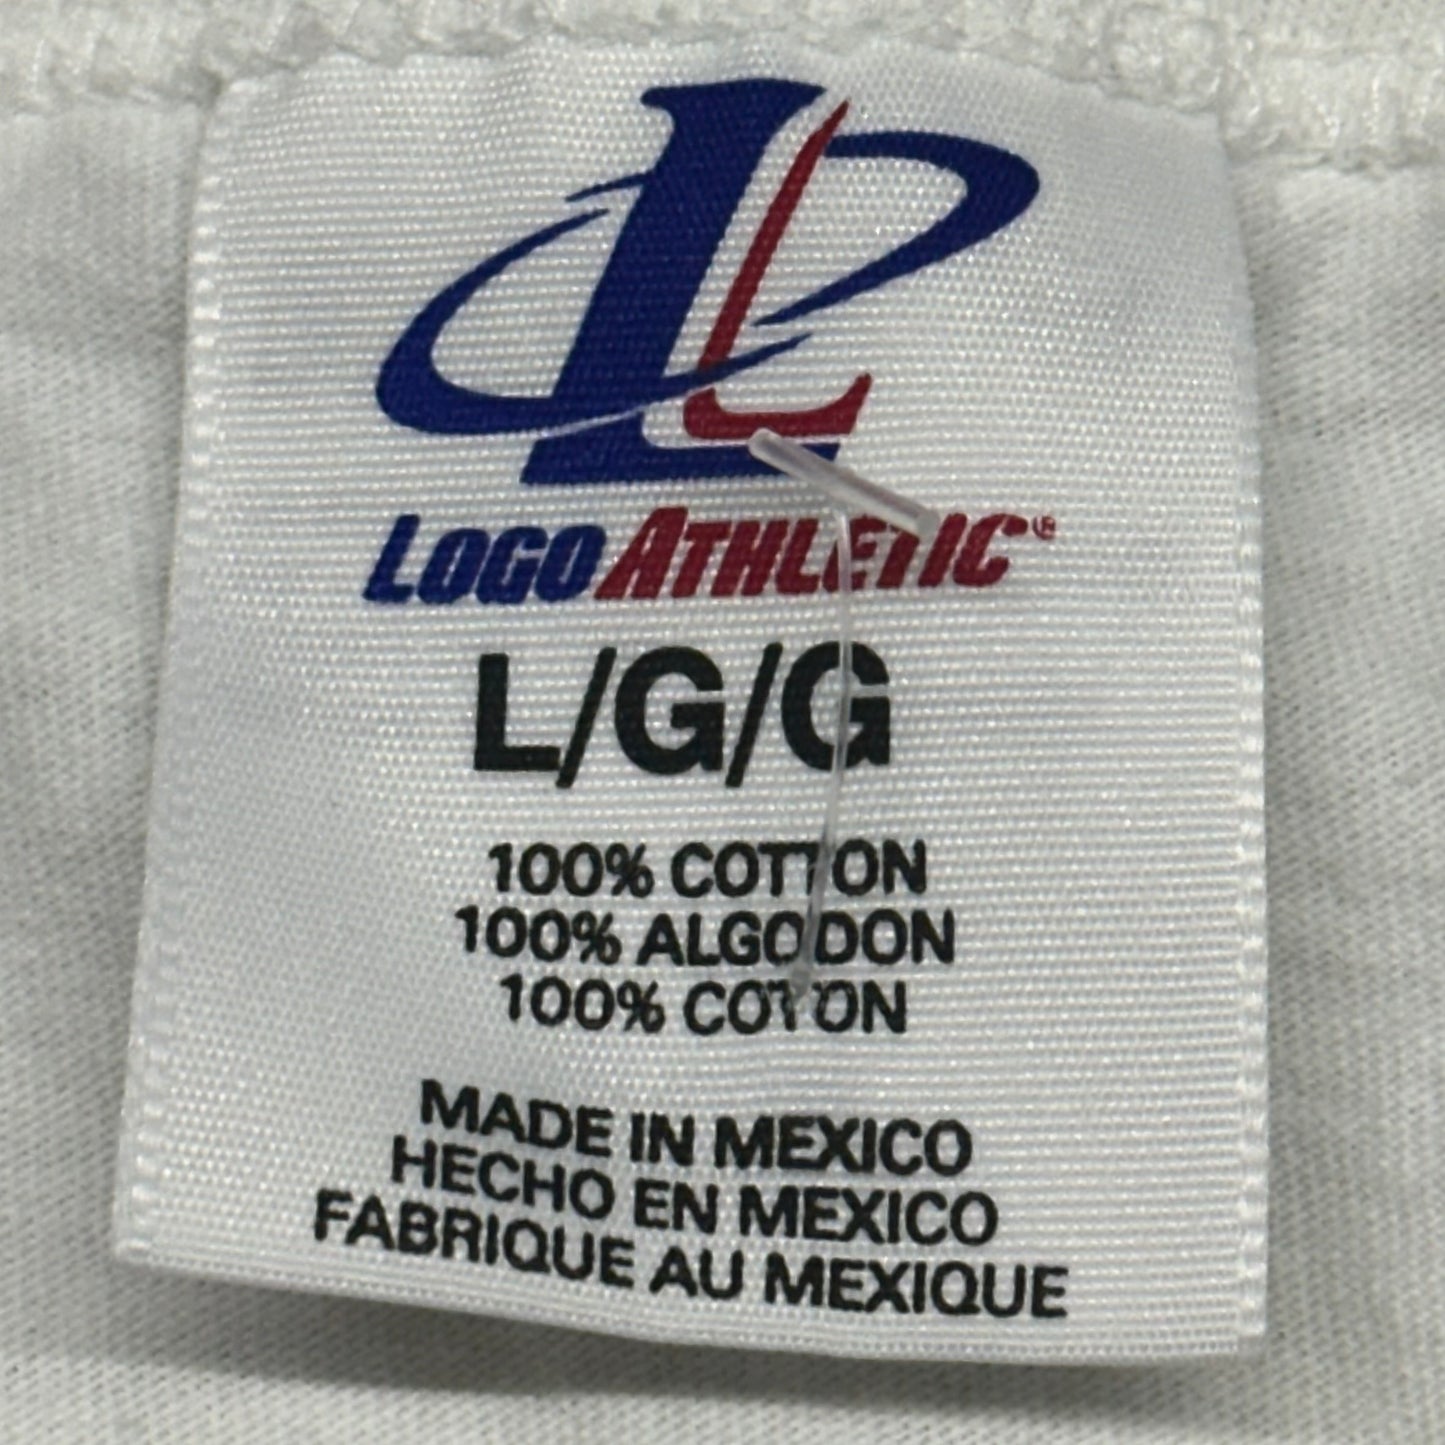 Cleveland Browns, Vintage 1999 Logo Atheltic T-shirt, Size: Large